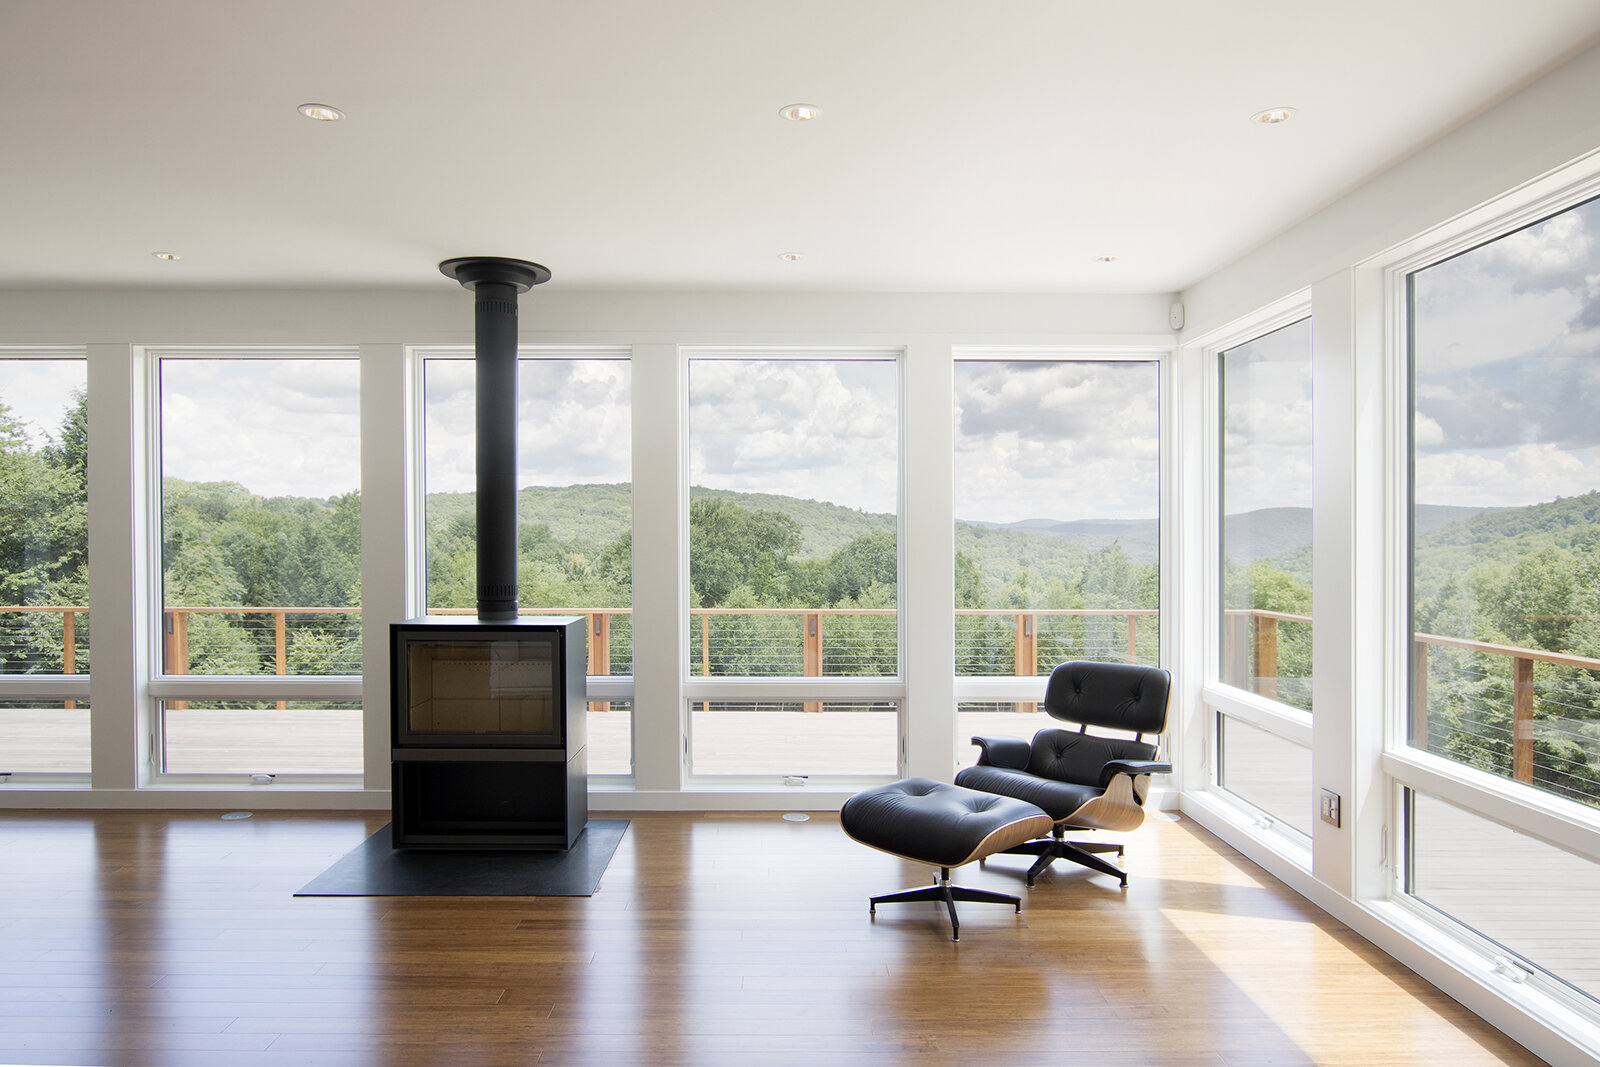 11-res4-re4a-resolution-4-architecture-modern-modular-prefab-sharon residence-interior-stove-furniture.jpg